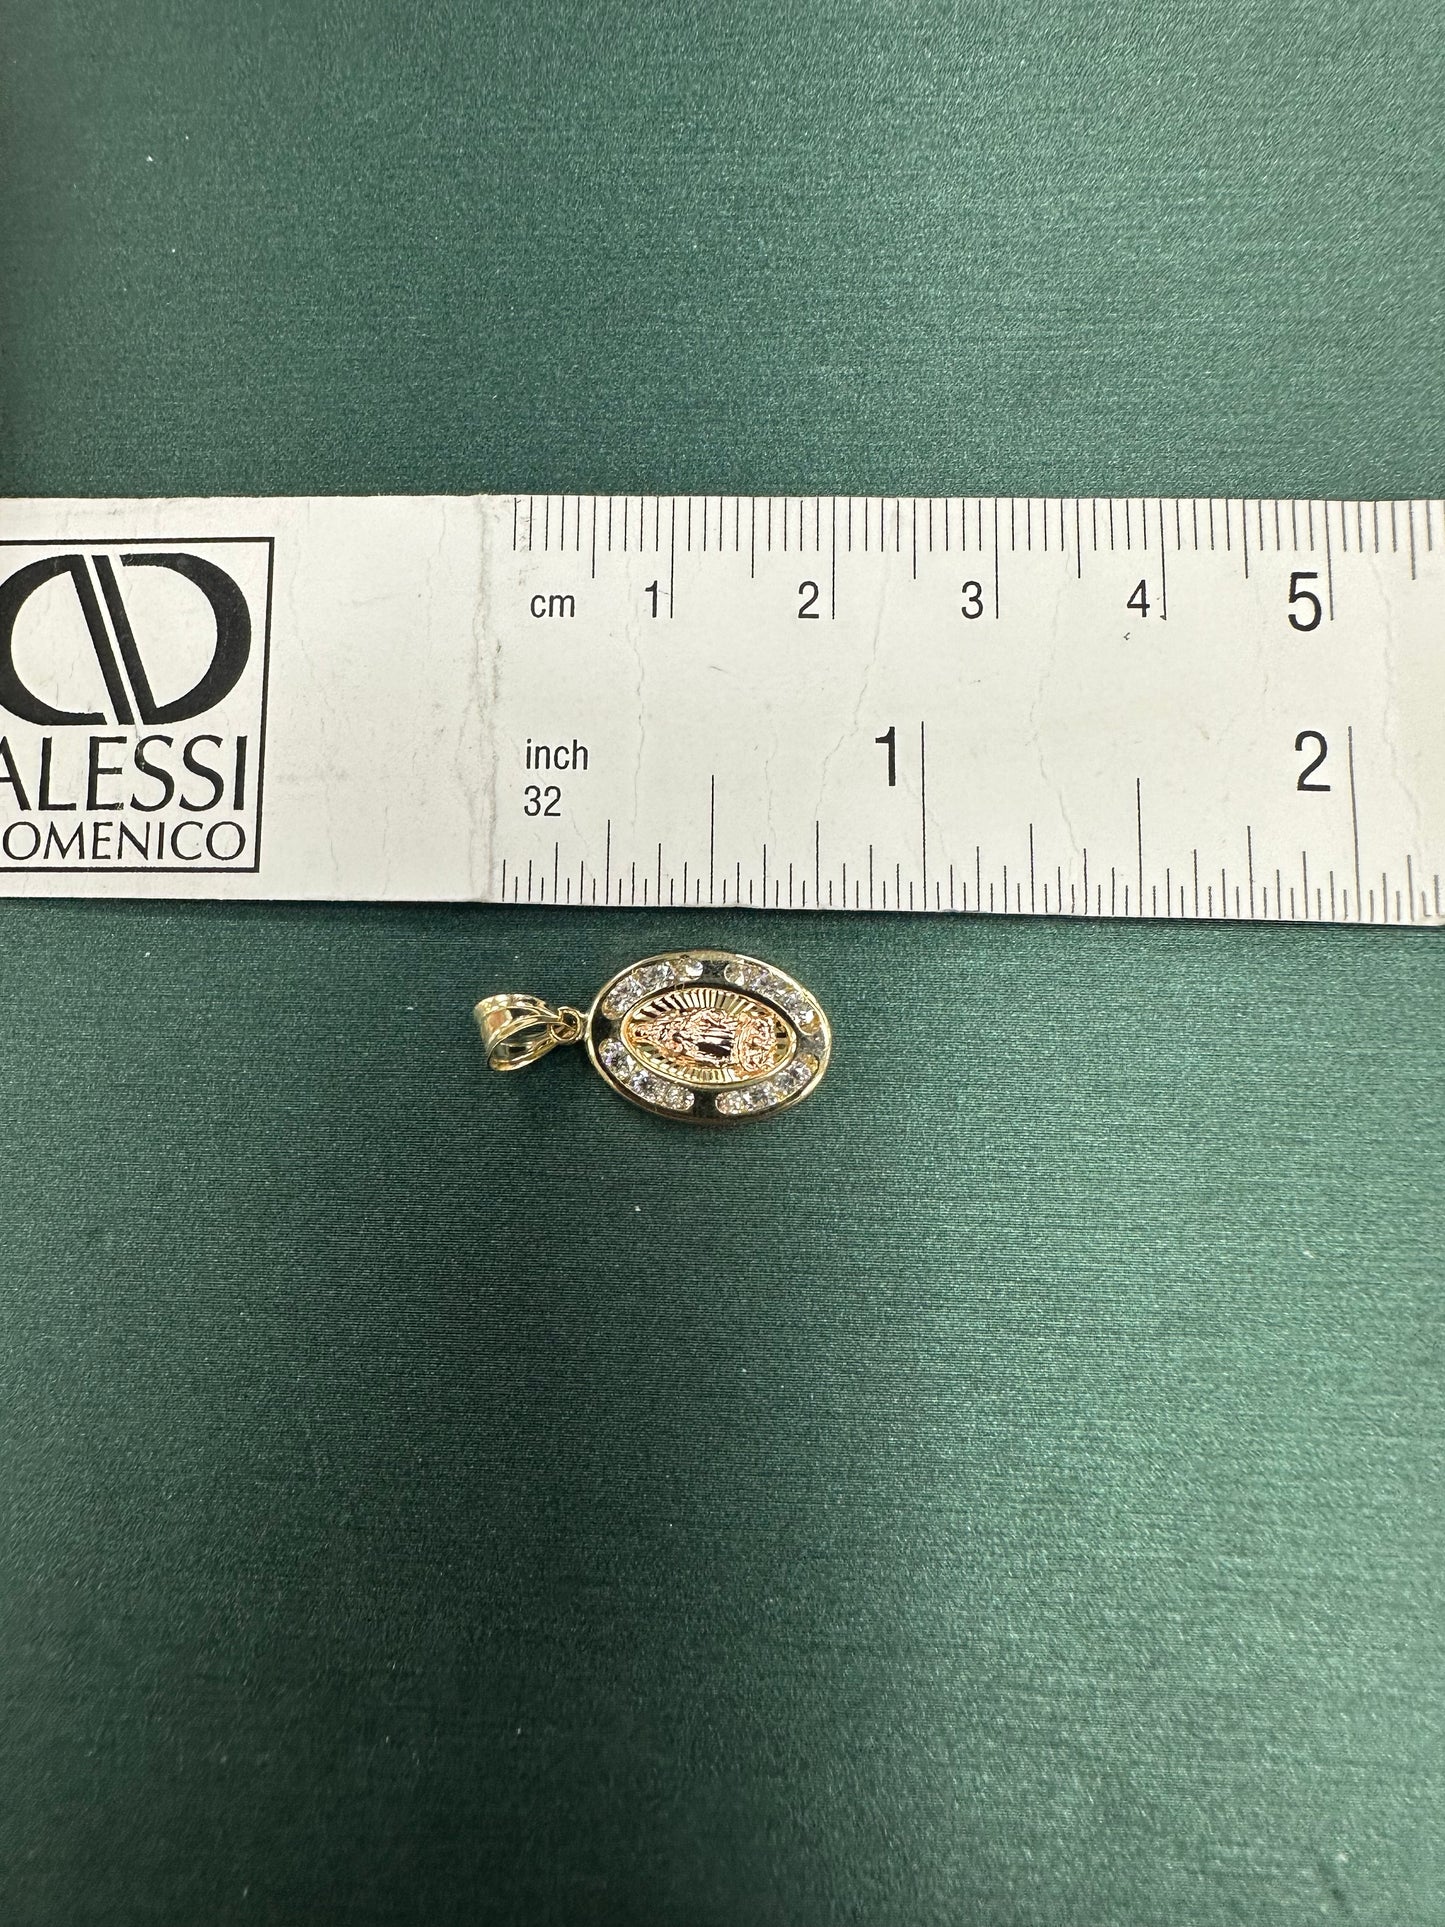 Virgin Guadalupe 2 tone rose center pendant Oval small